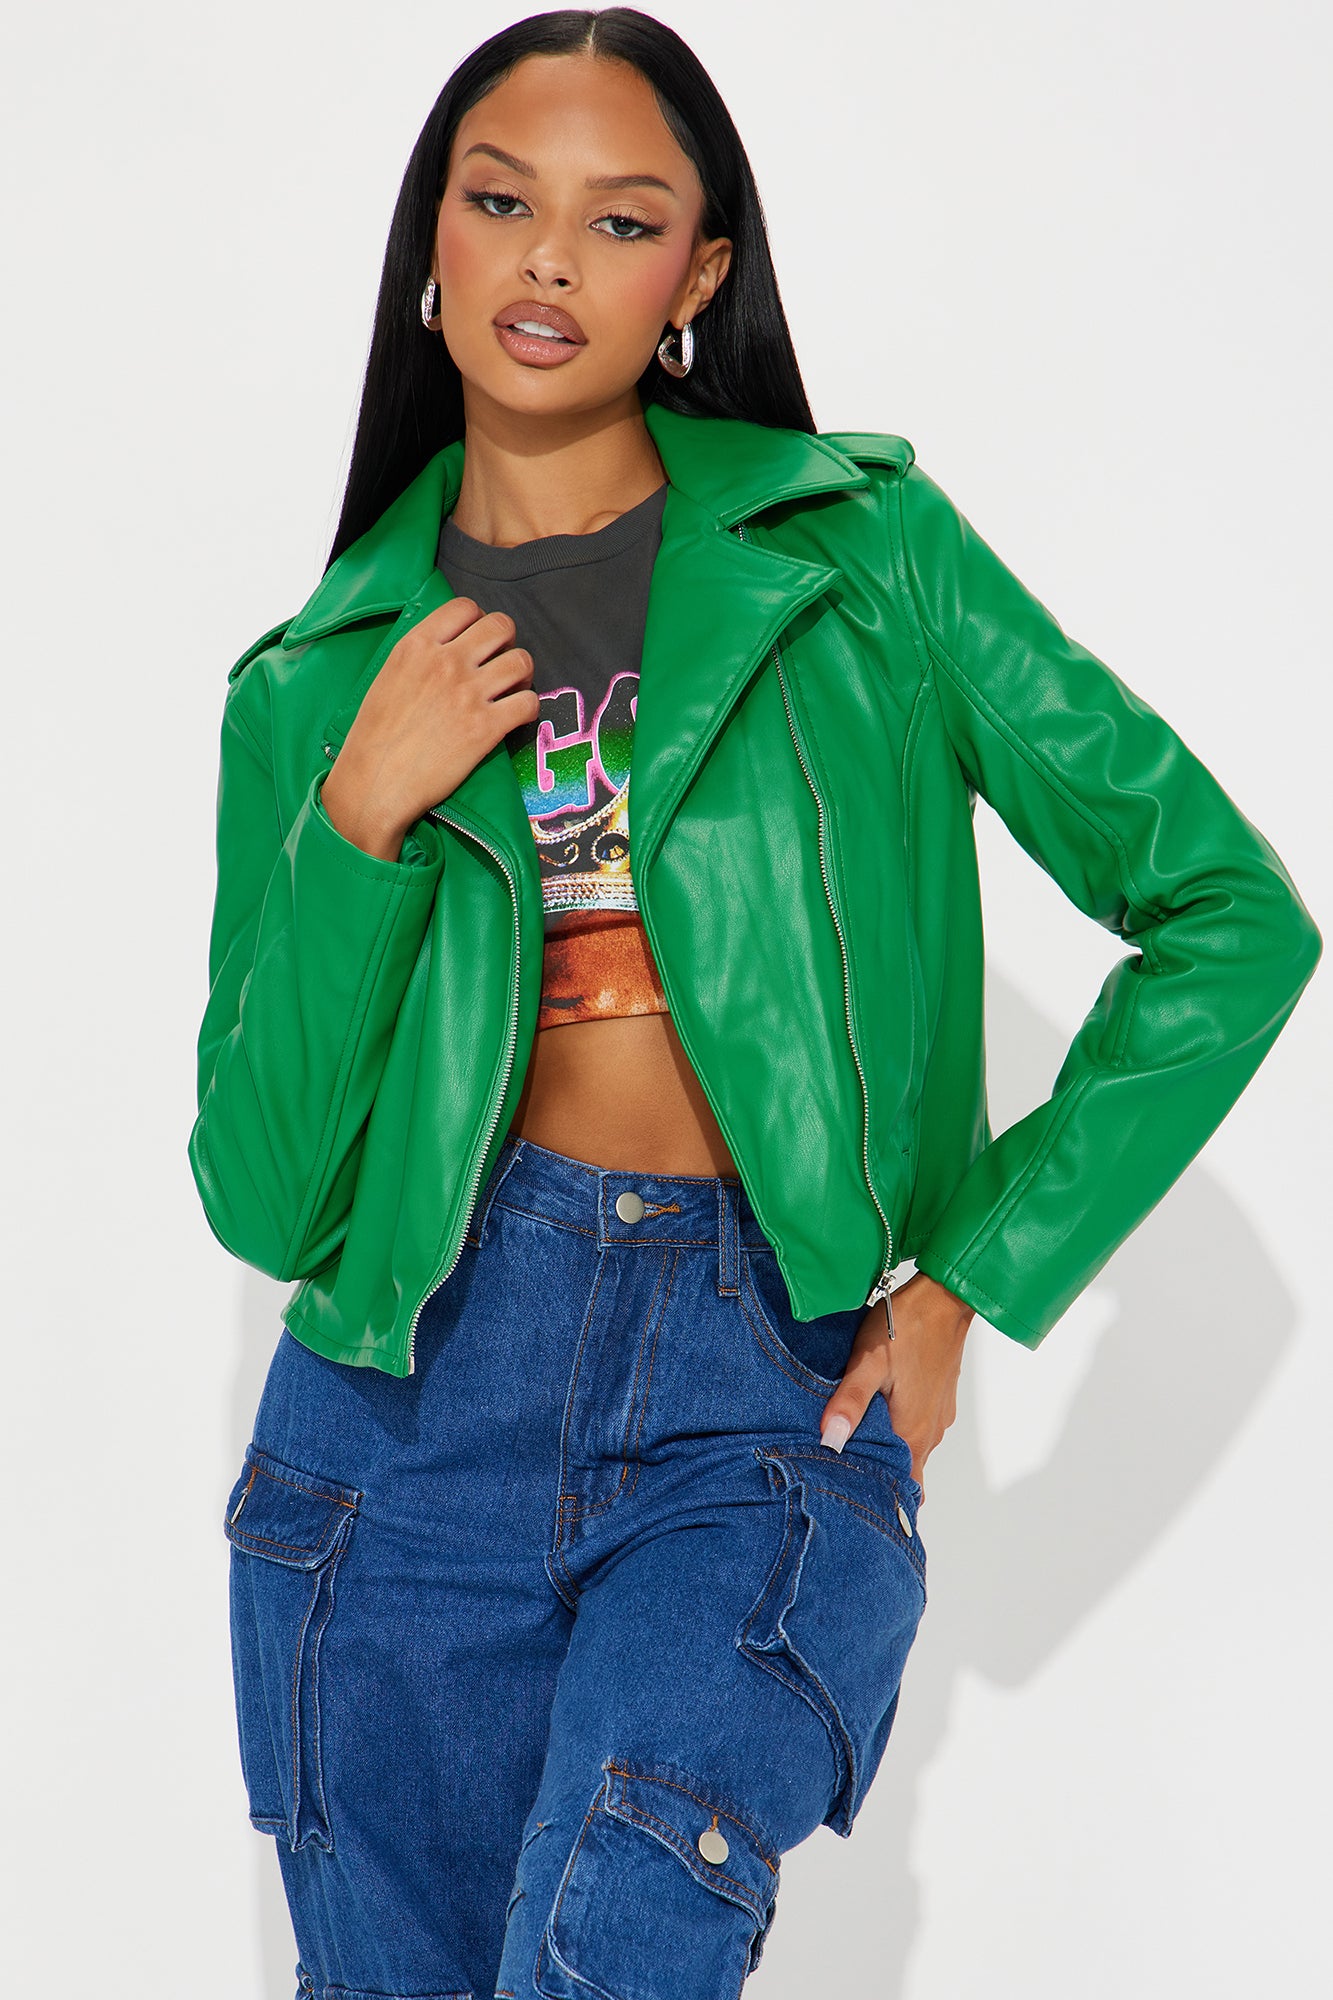 Fashionable Kelly Green Letterman Jacket